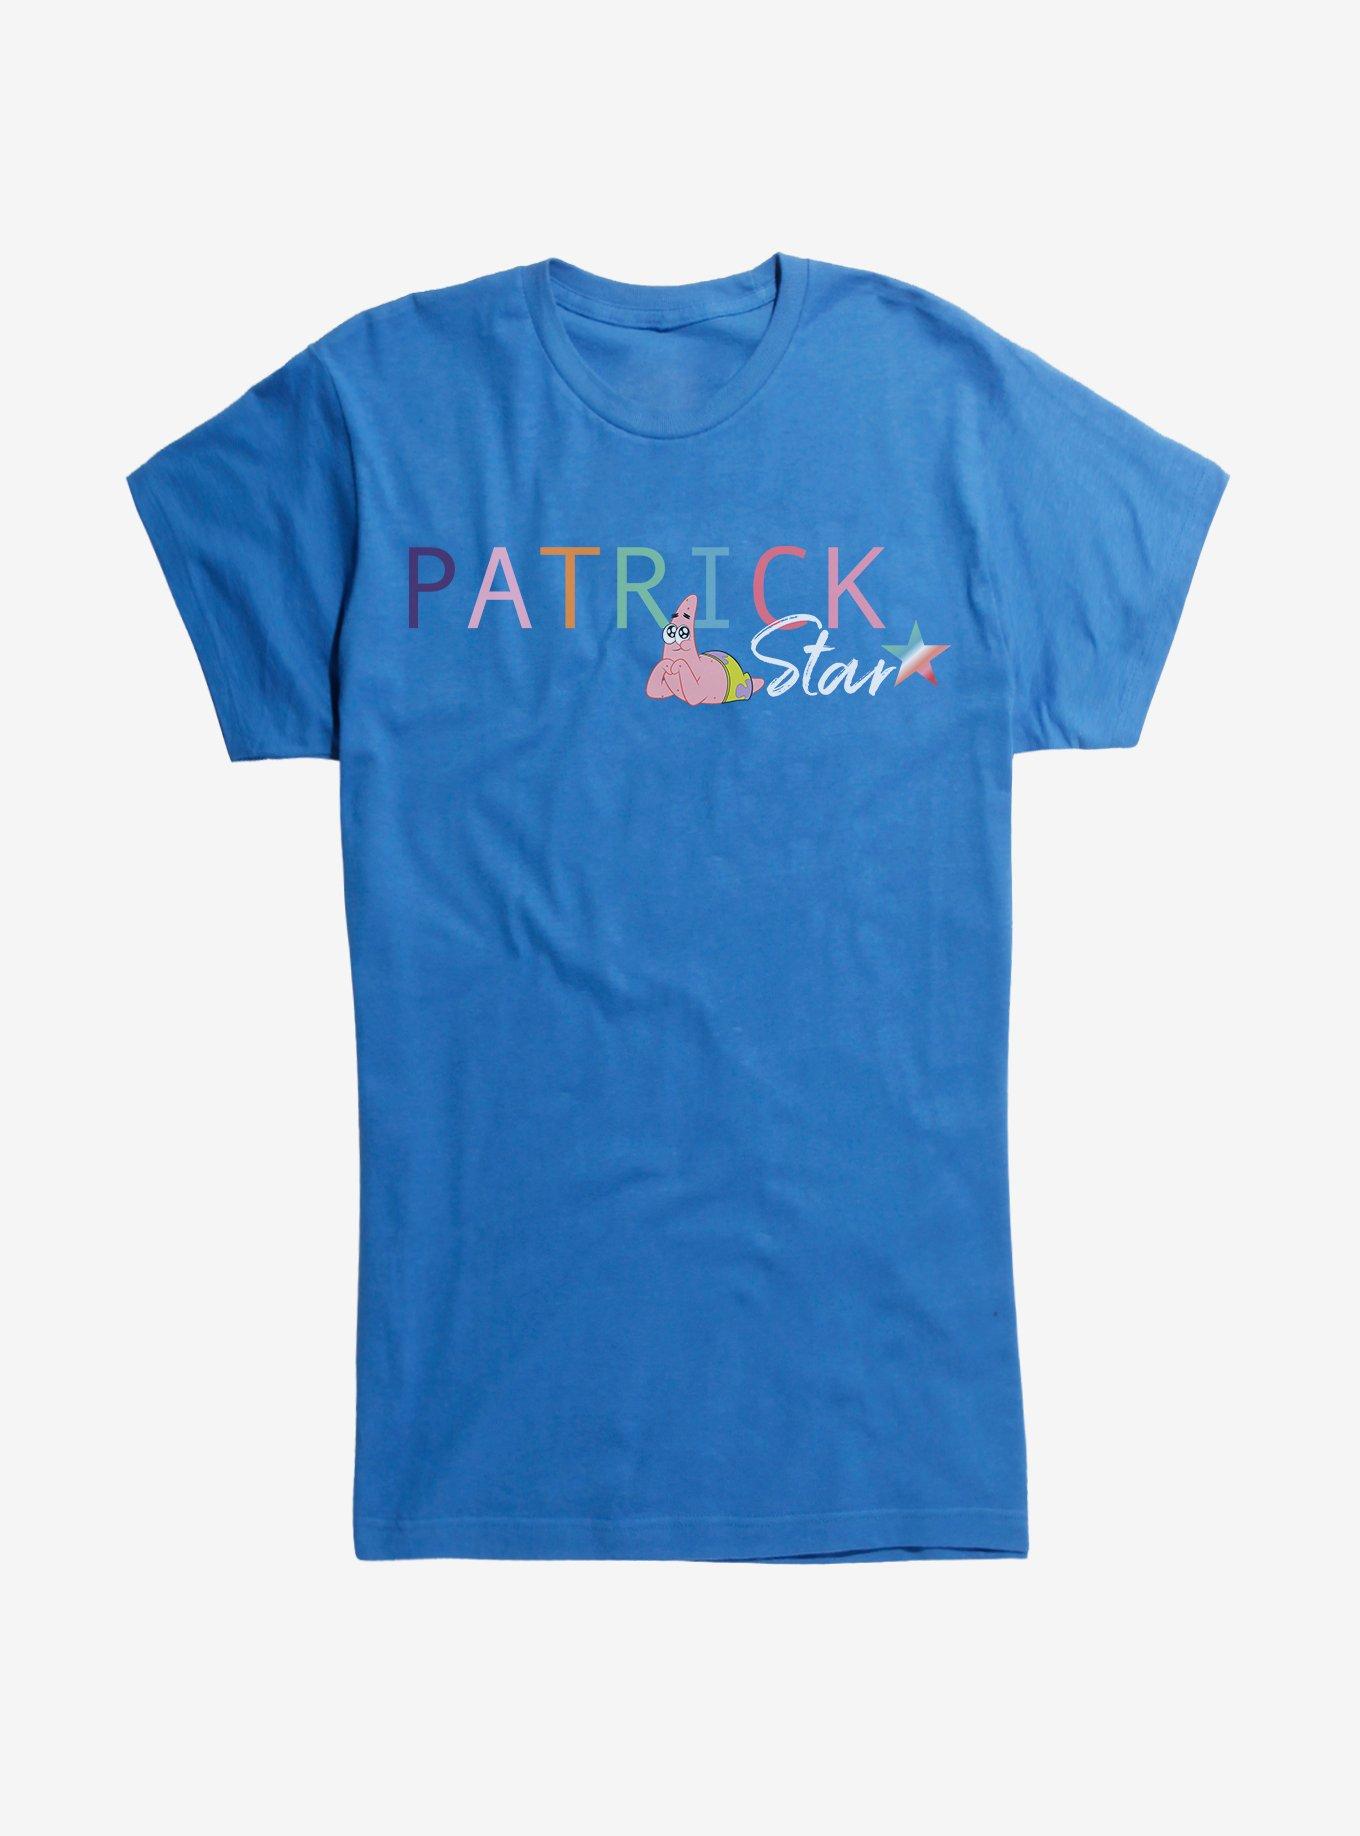 Spongebob Squarepants Patrick Star Girls T-Shirt, ROYAL, hi-res